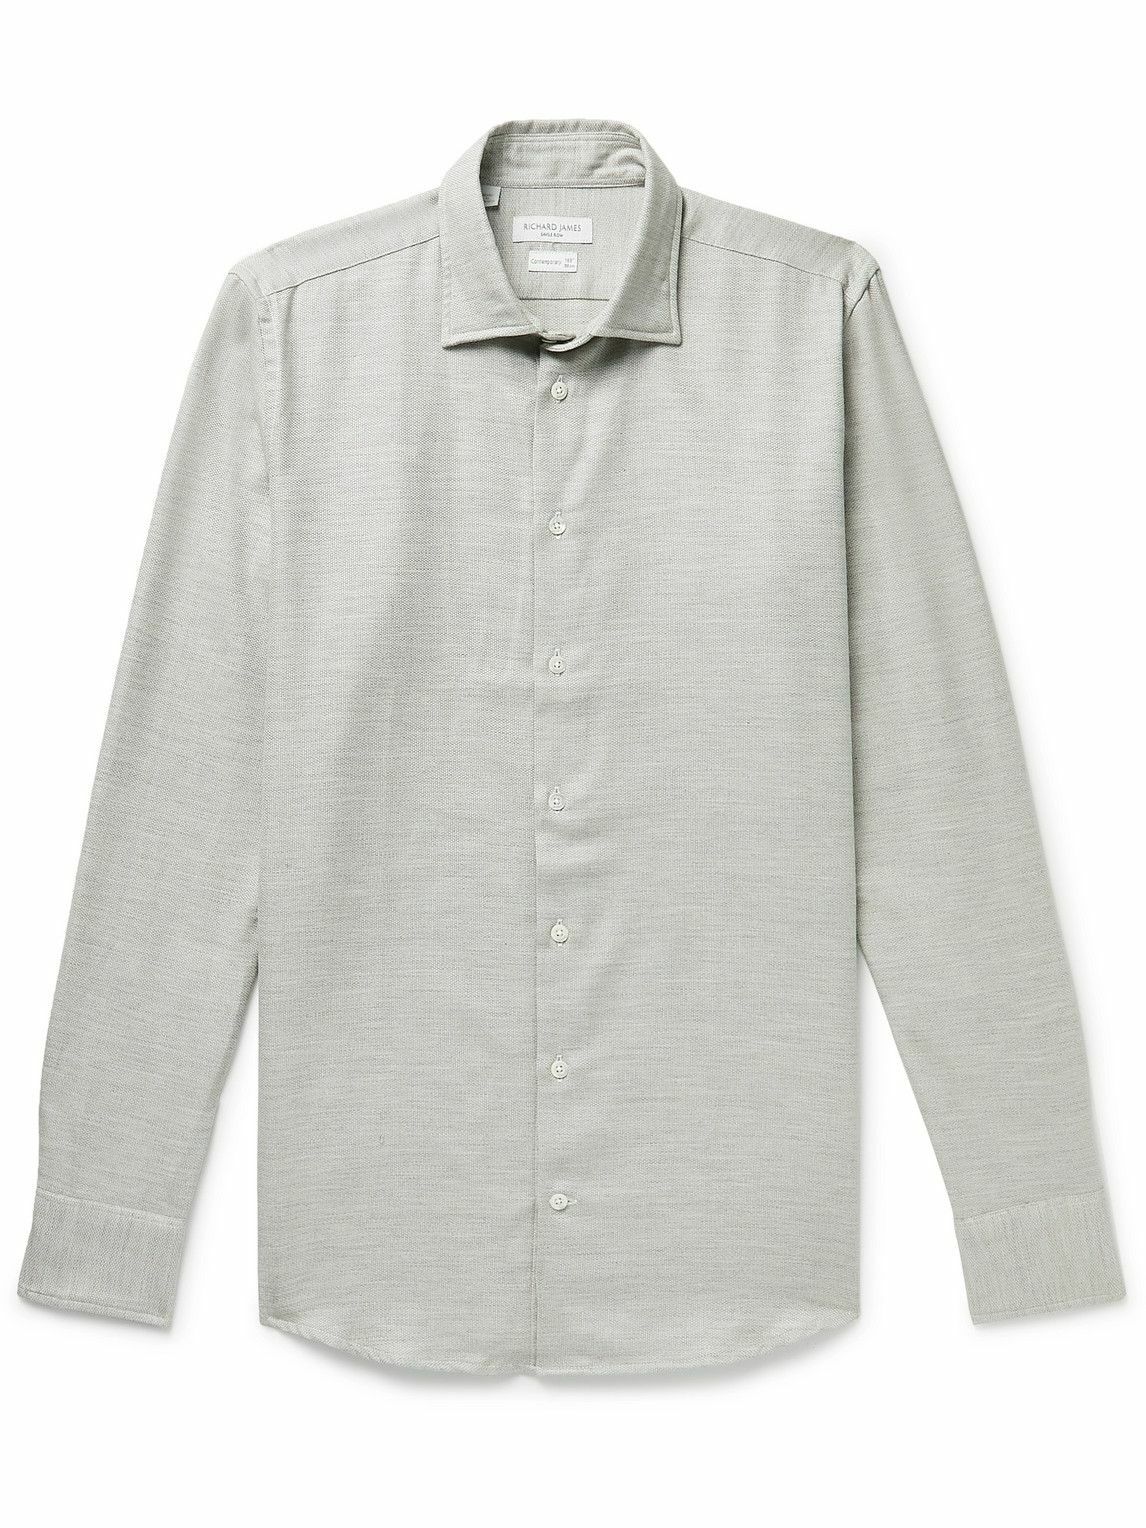 Richard James - Spread-Collar Birdseye Cotton Shirt - Gray Richard James